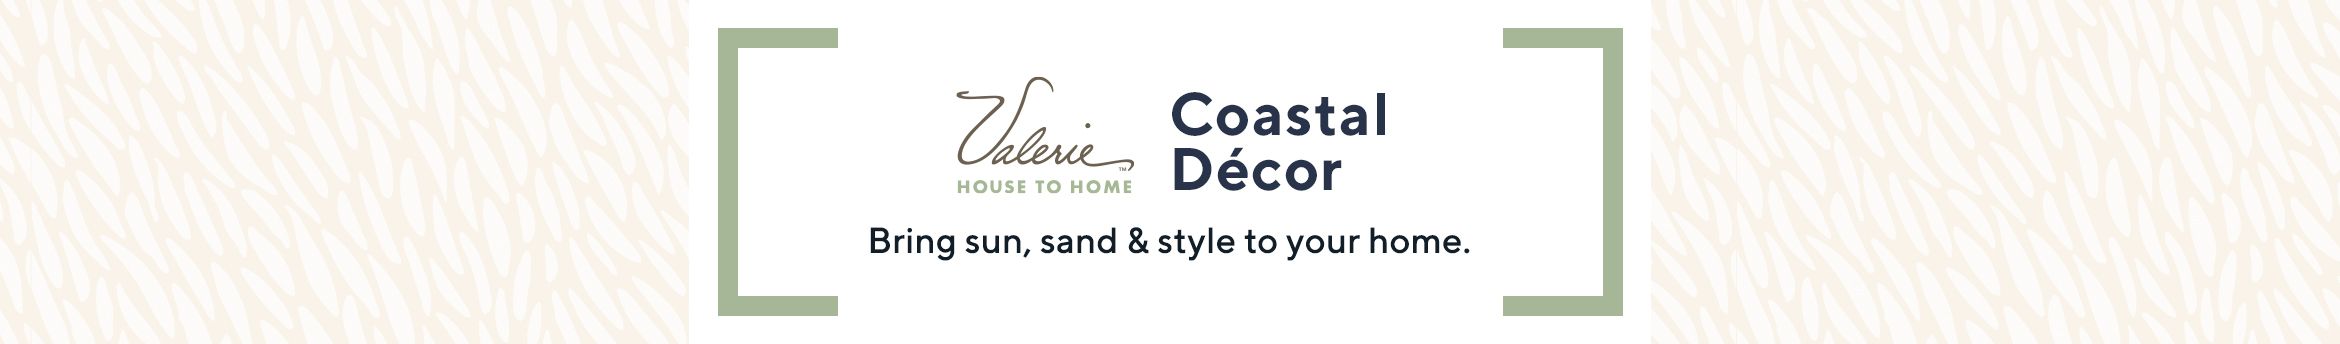 Valerie Parr Hill. Coastal Décor: Bring sun, sand & style to your home.